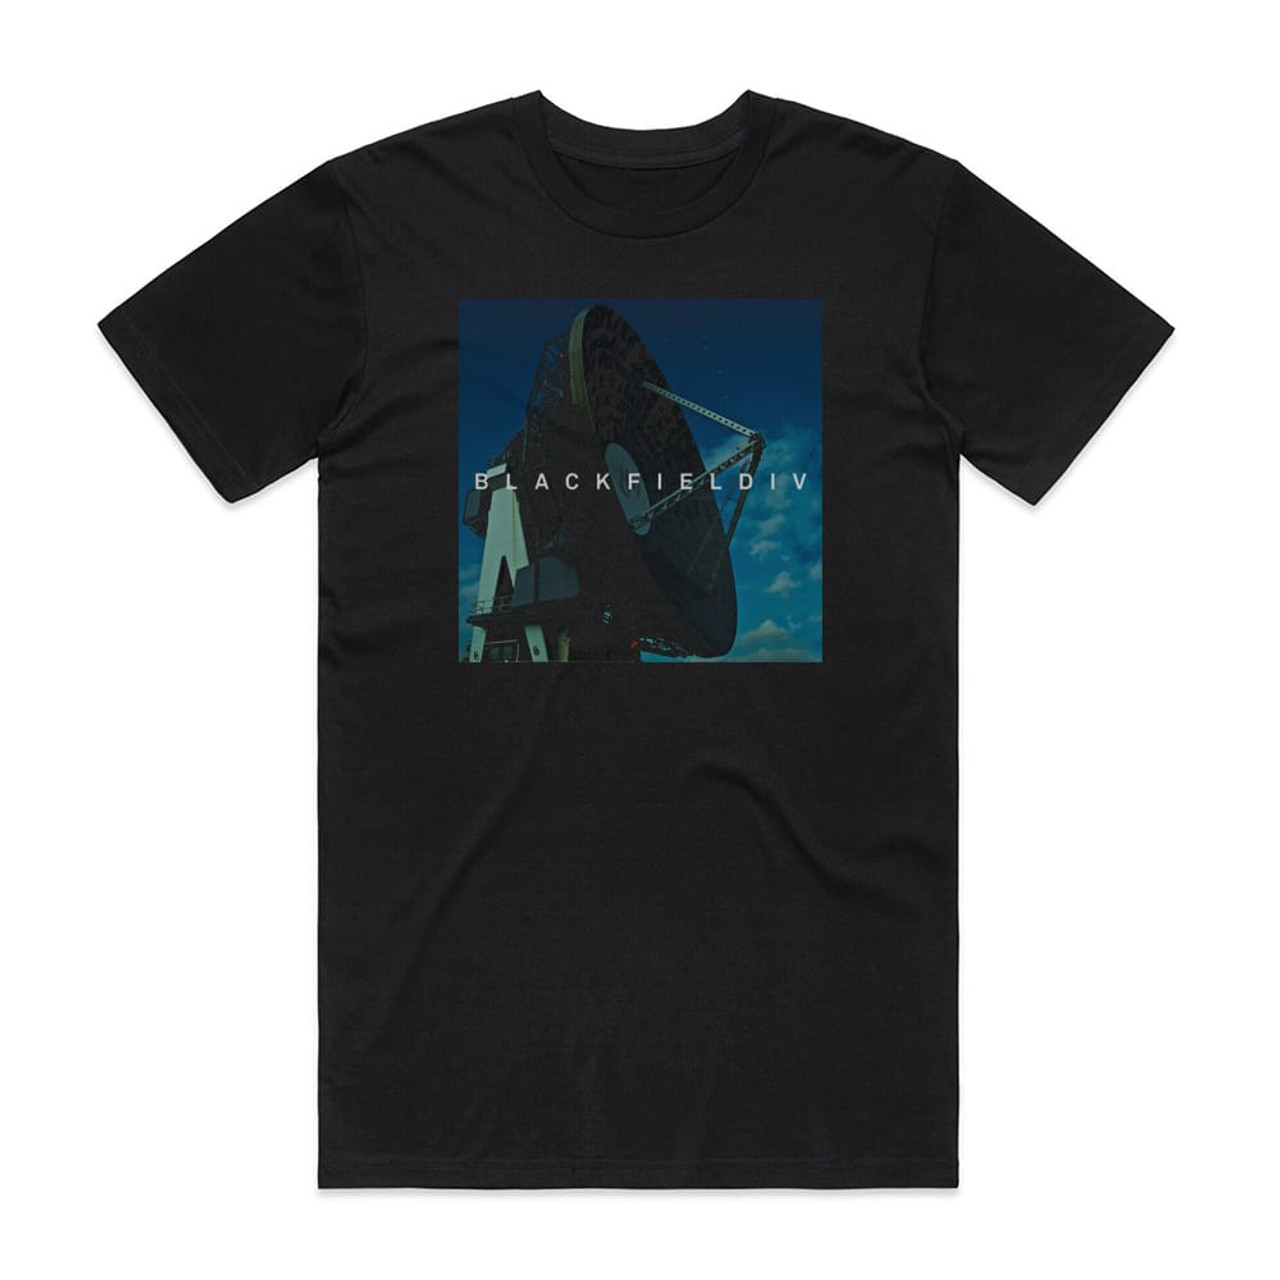 Blackfield Blackfield Iv Album Cover T-Shirt Black